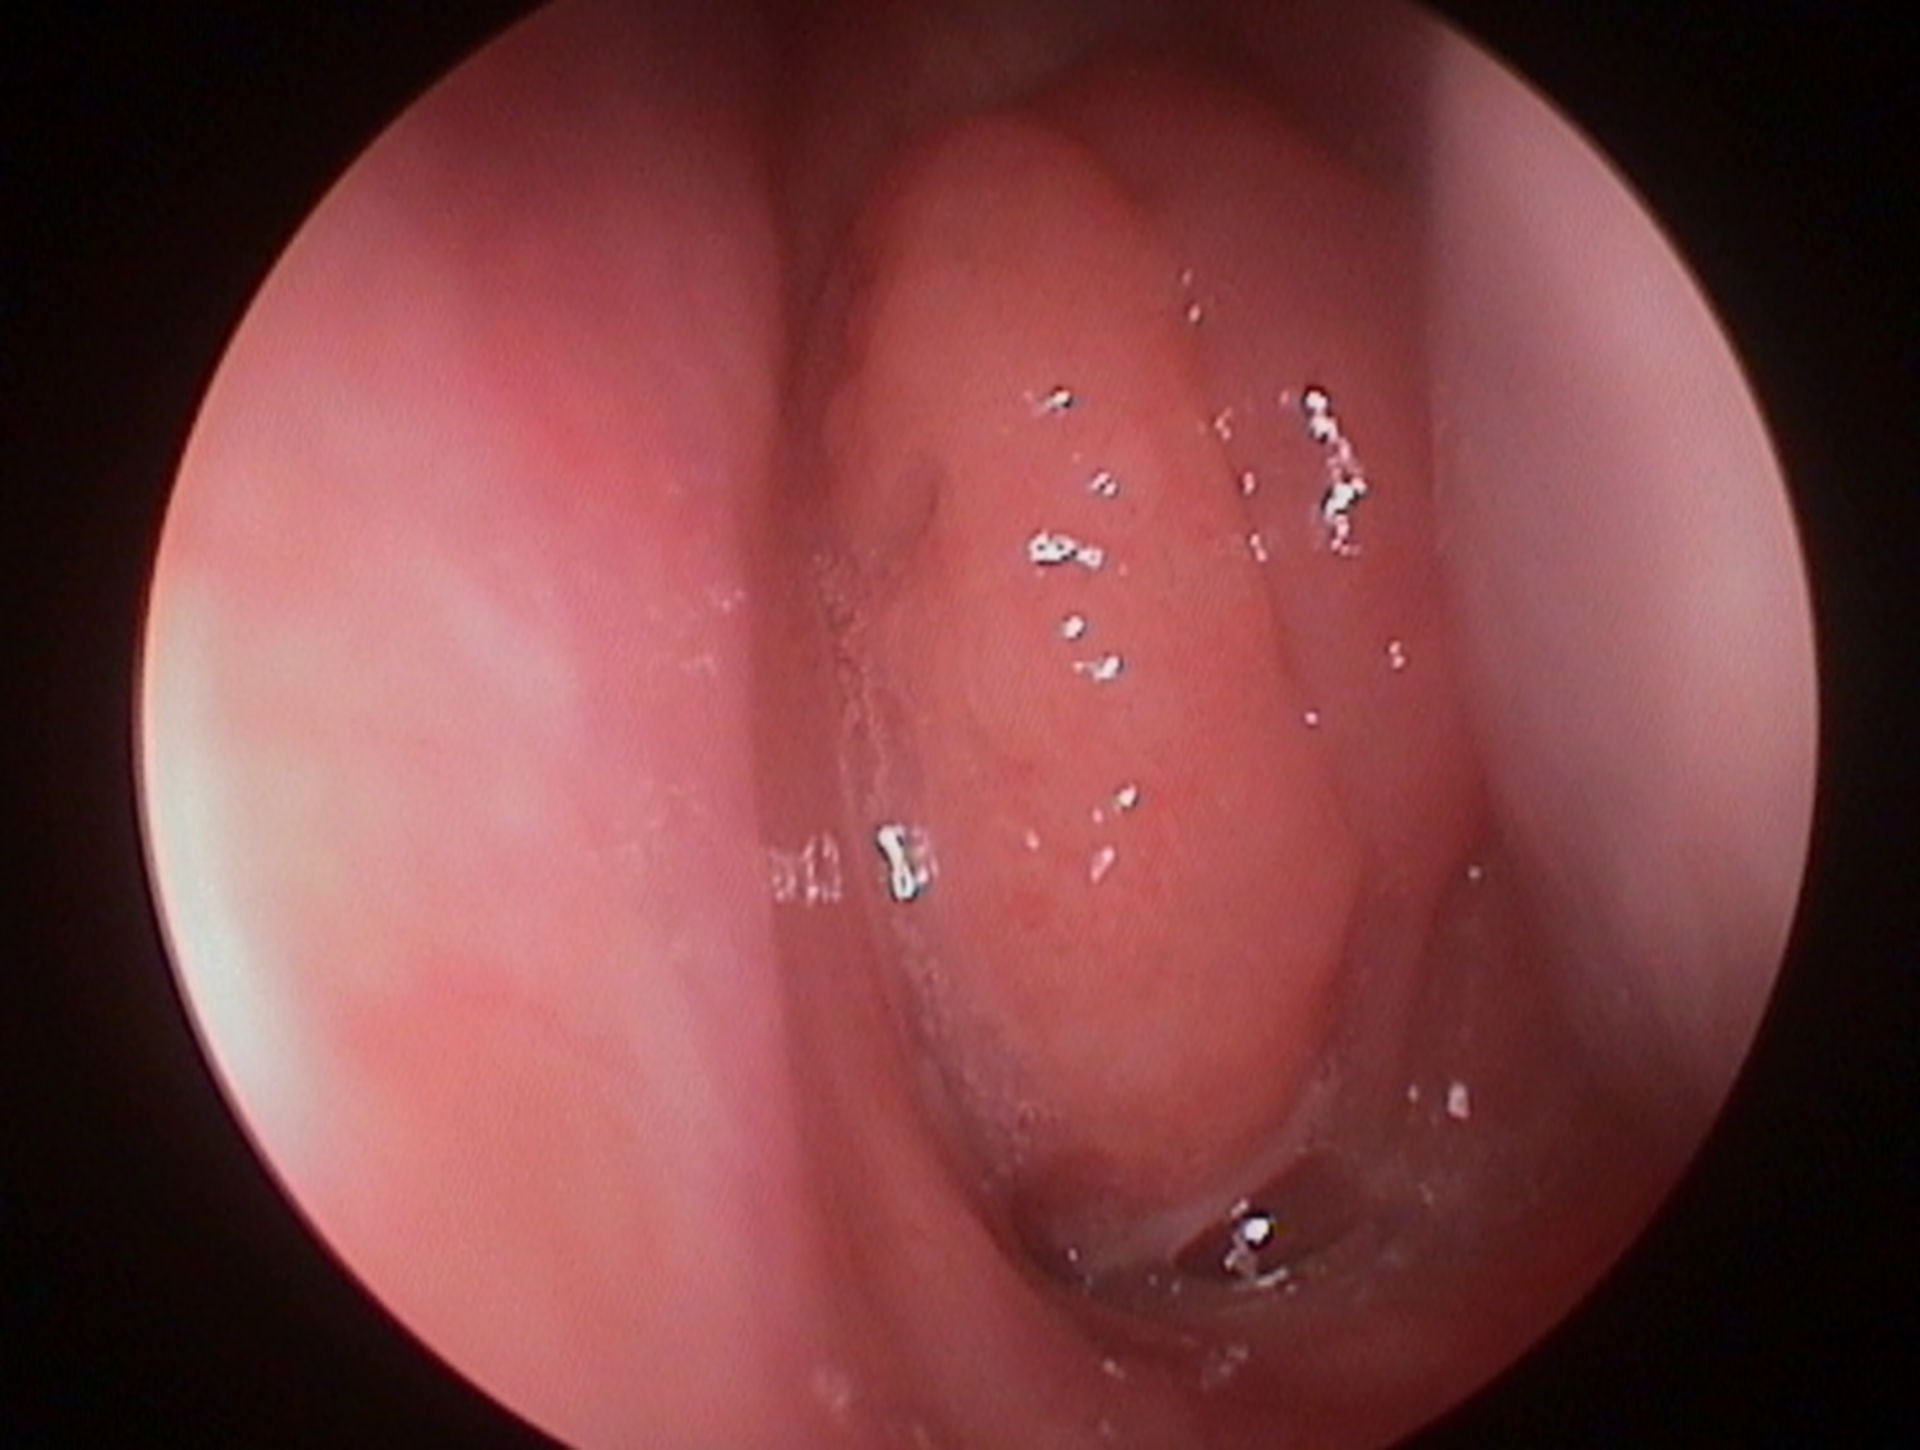 Large pharyngeal tonsils